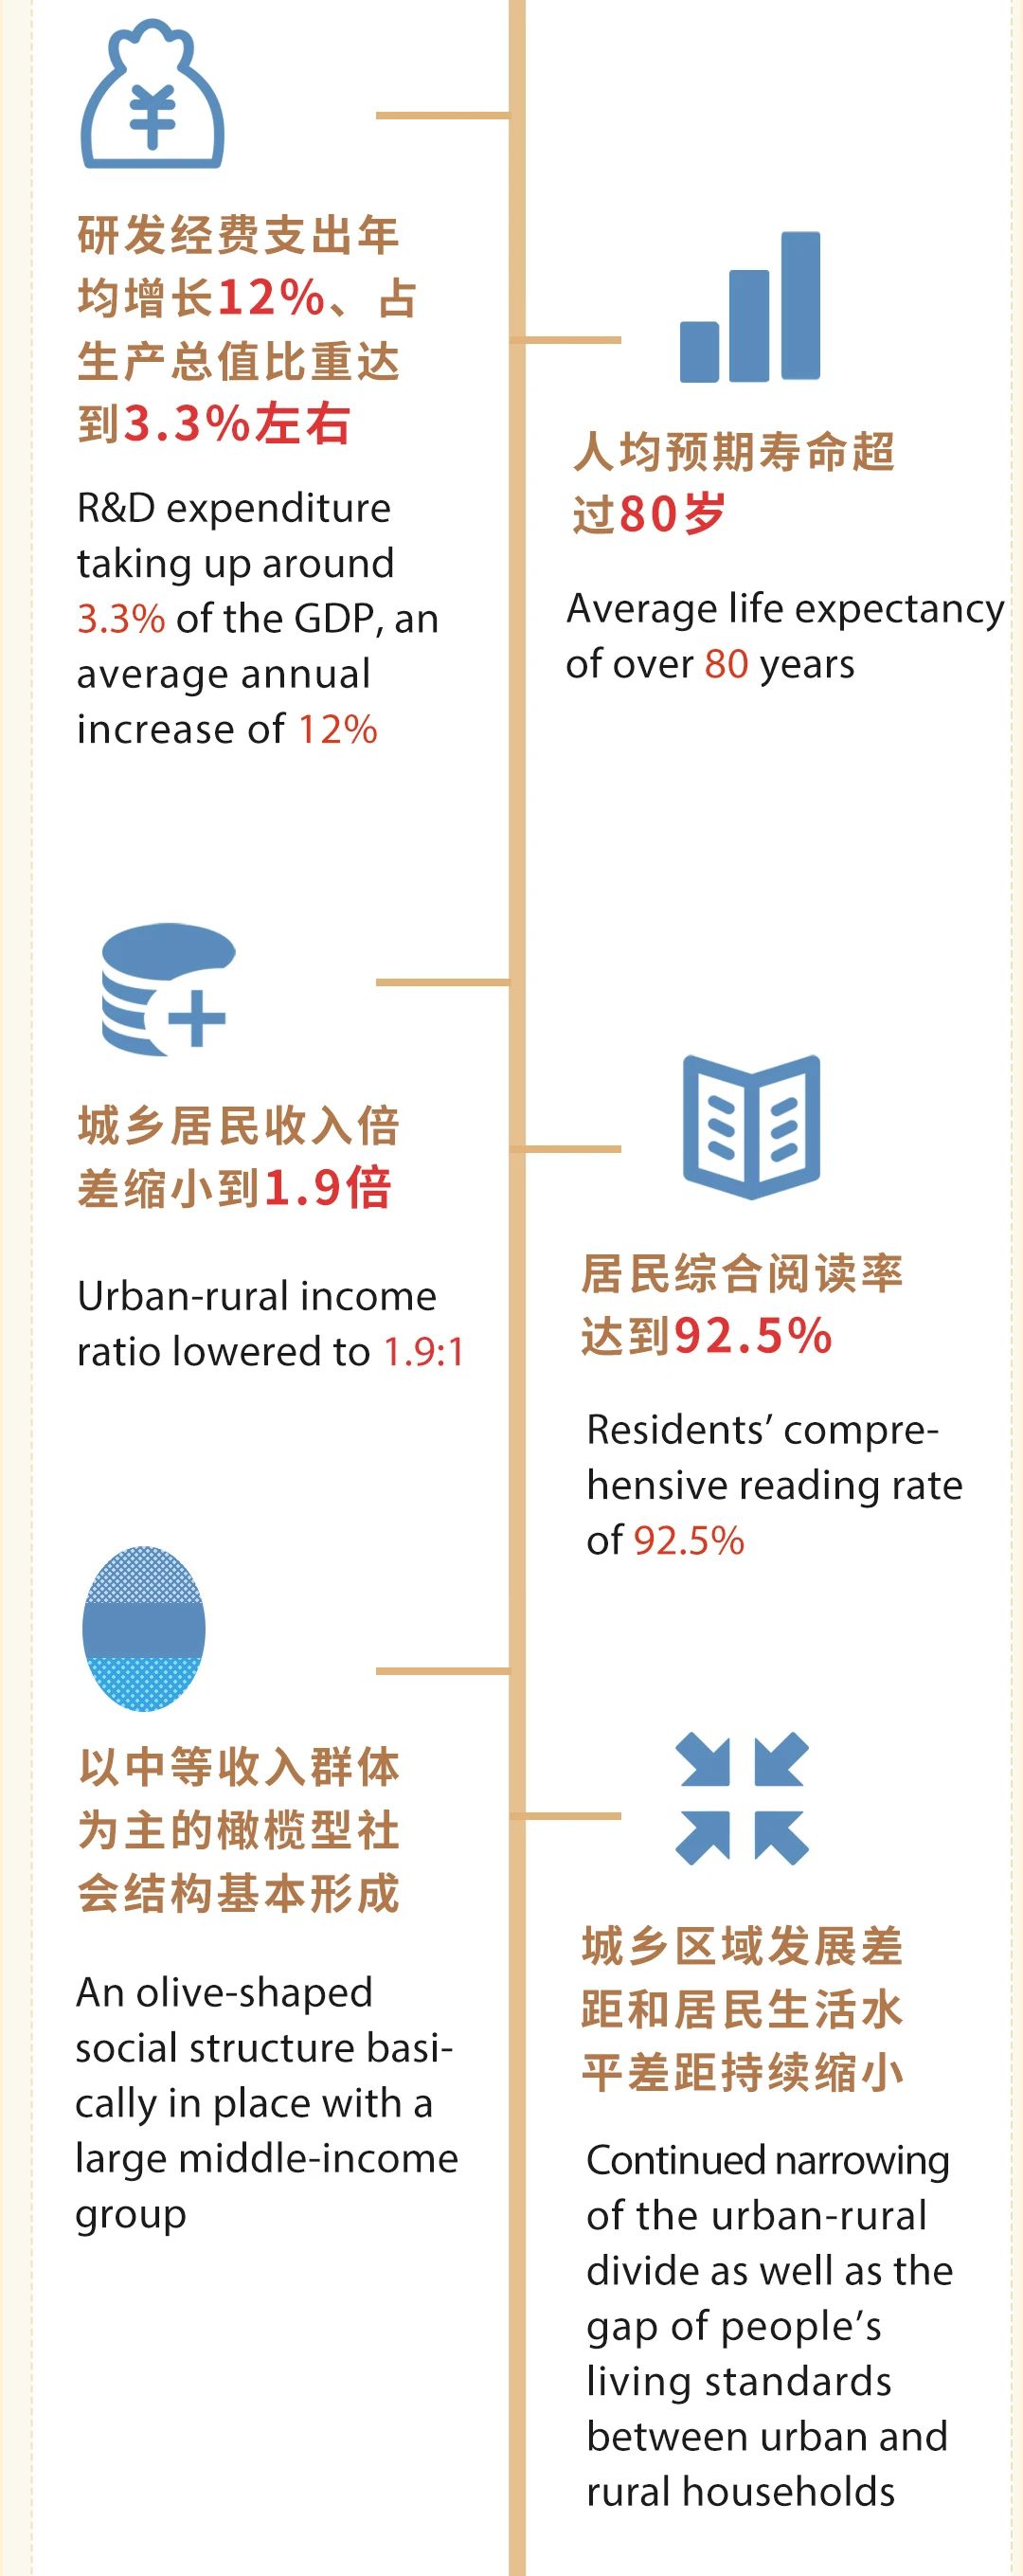 Zhejiang Govt Report 14th Five Year Plan 2.jpg